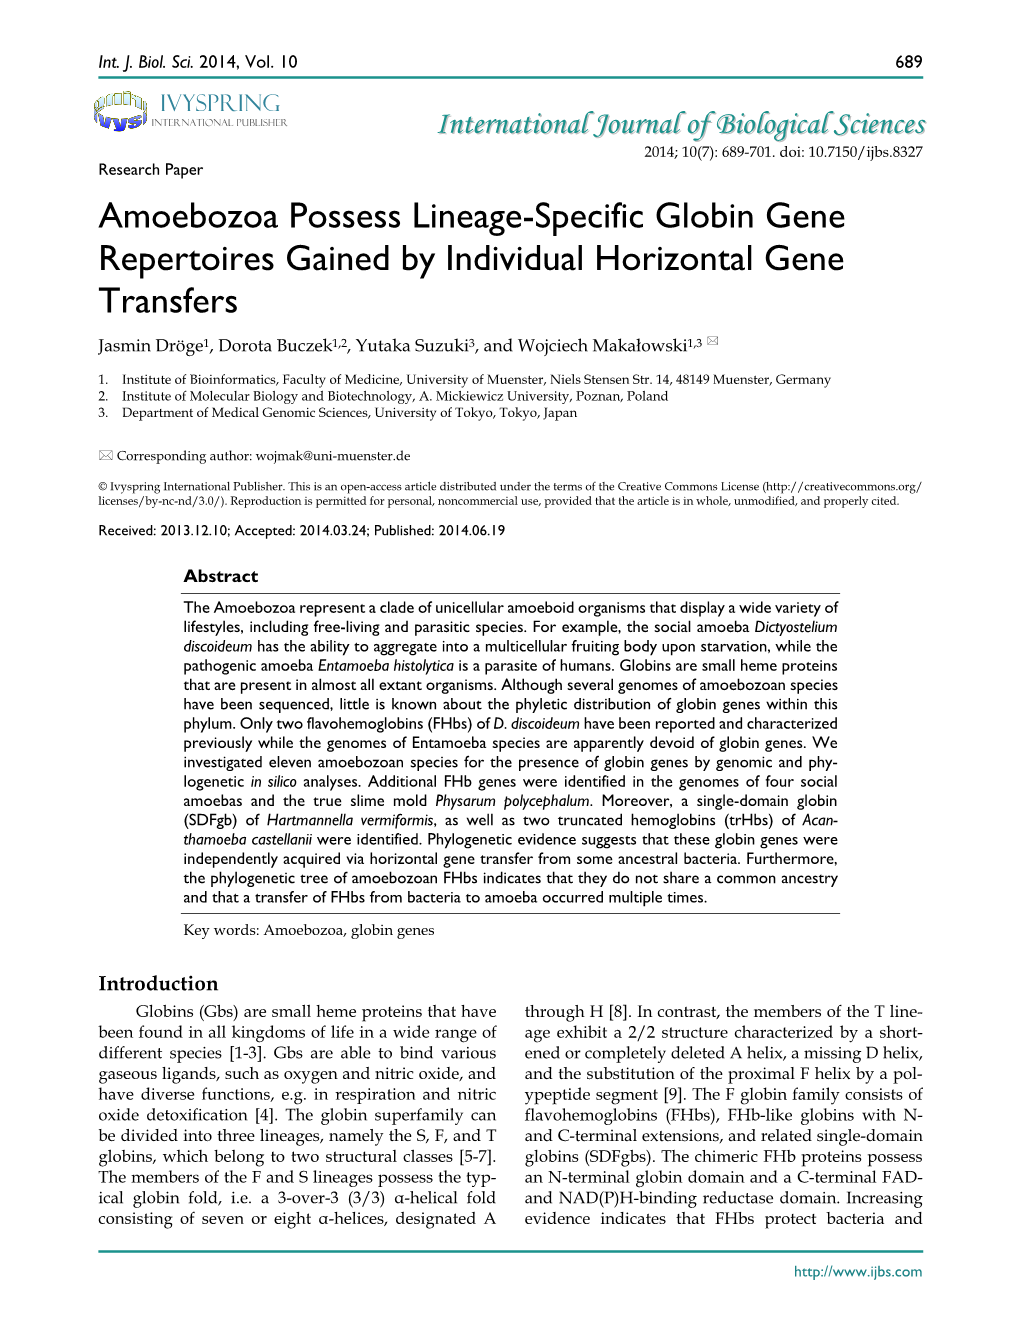 Amoebozoa Possess Lineage-Specific Globin Gene Repertoires Gained by Individual Horizontal Gene Transfers